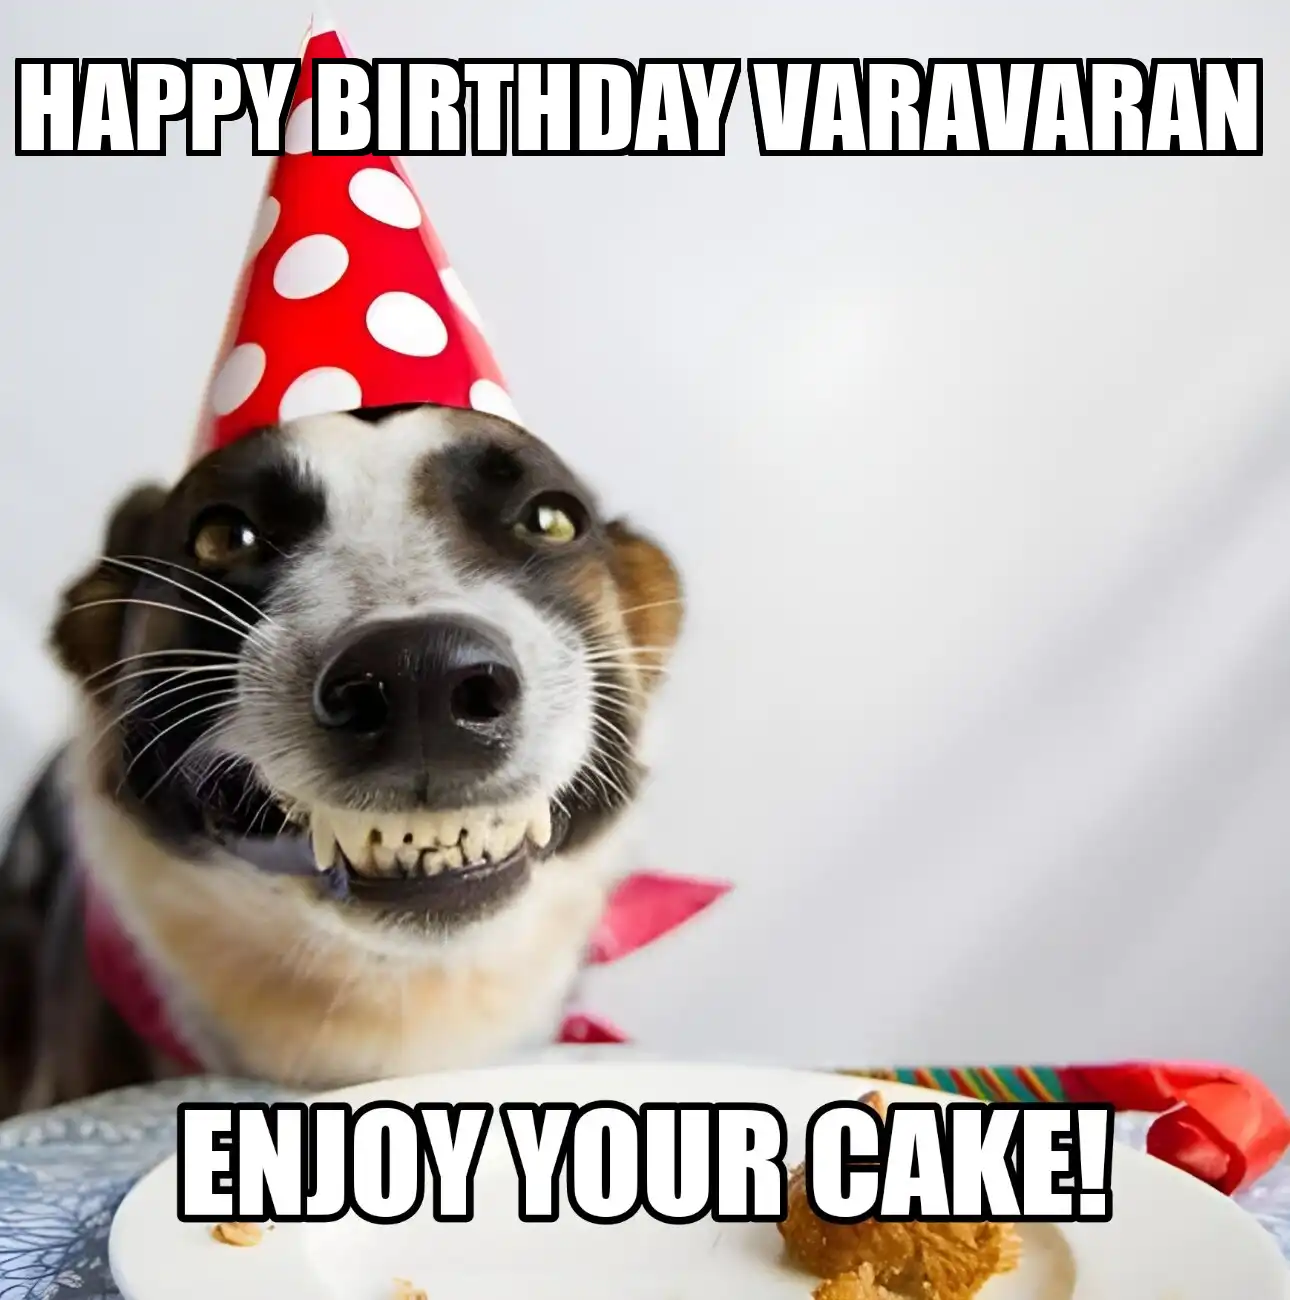 Happy Birthday Varavaran Enjoy Your Cake Dog Meme